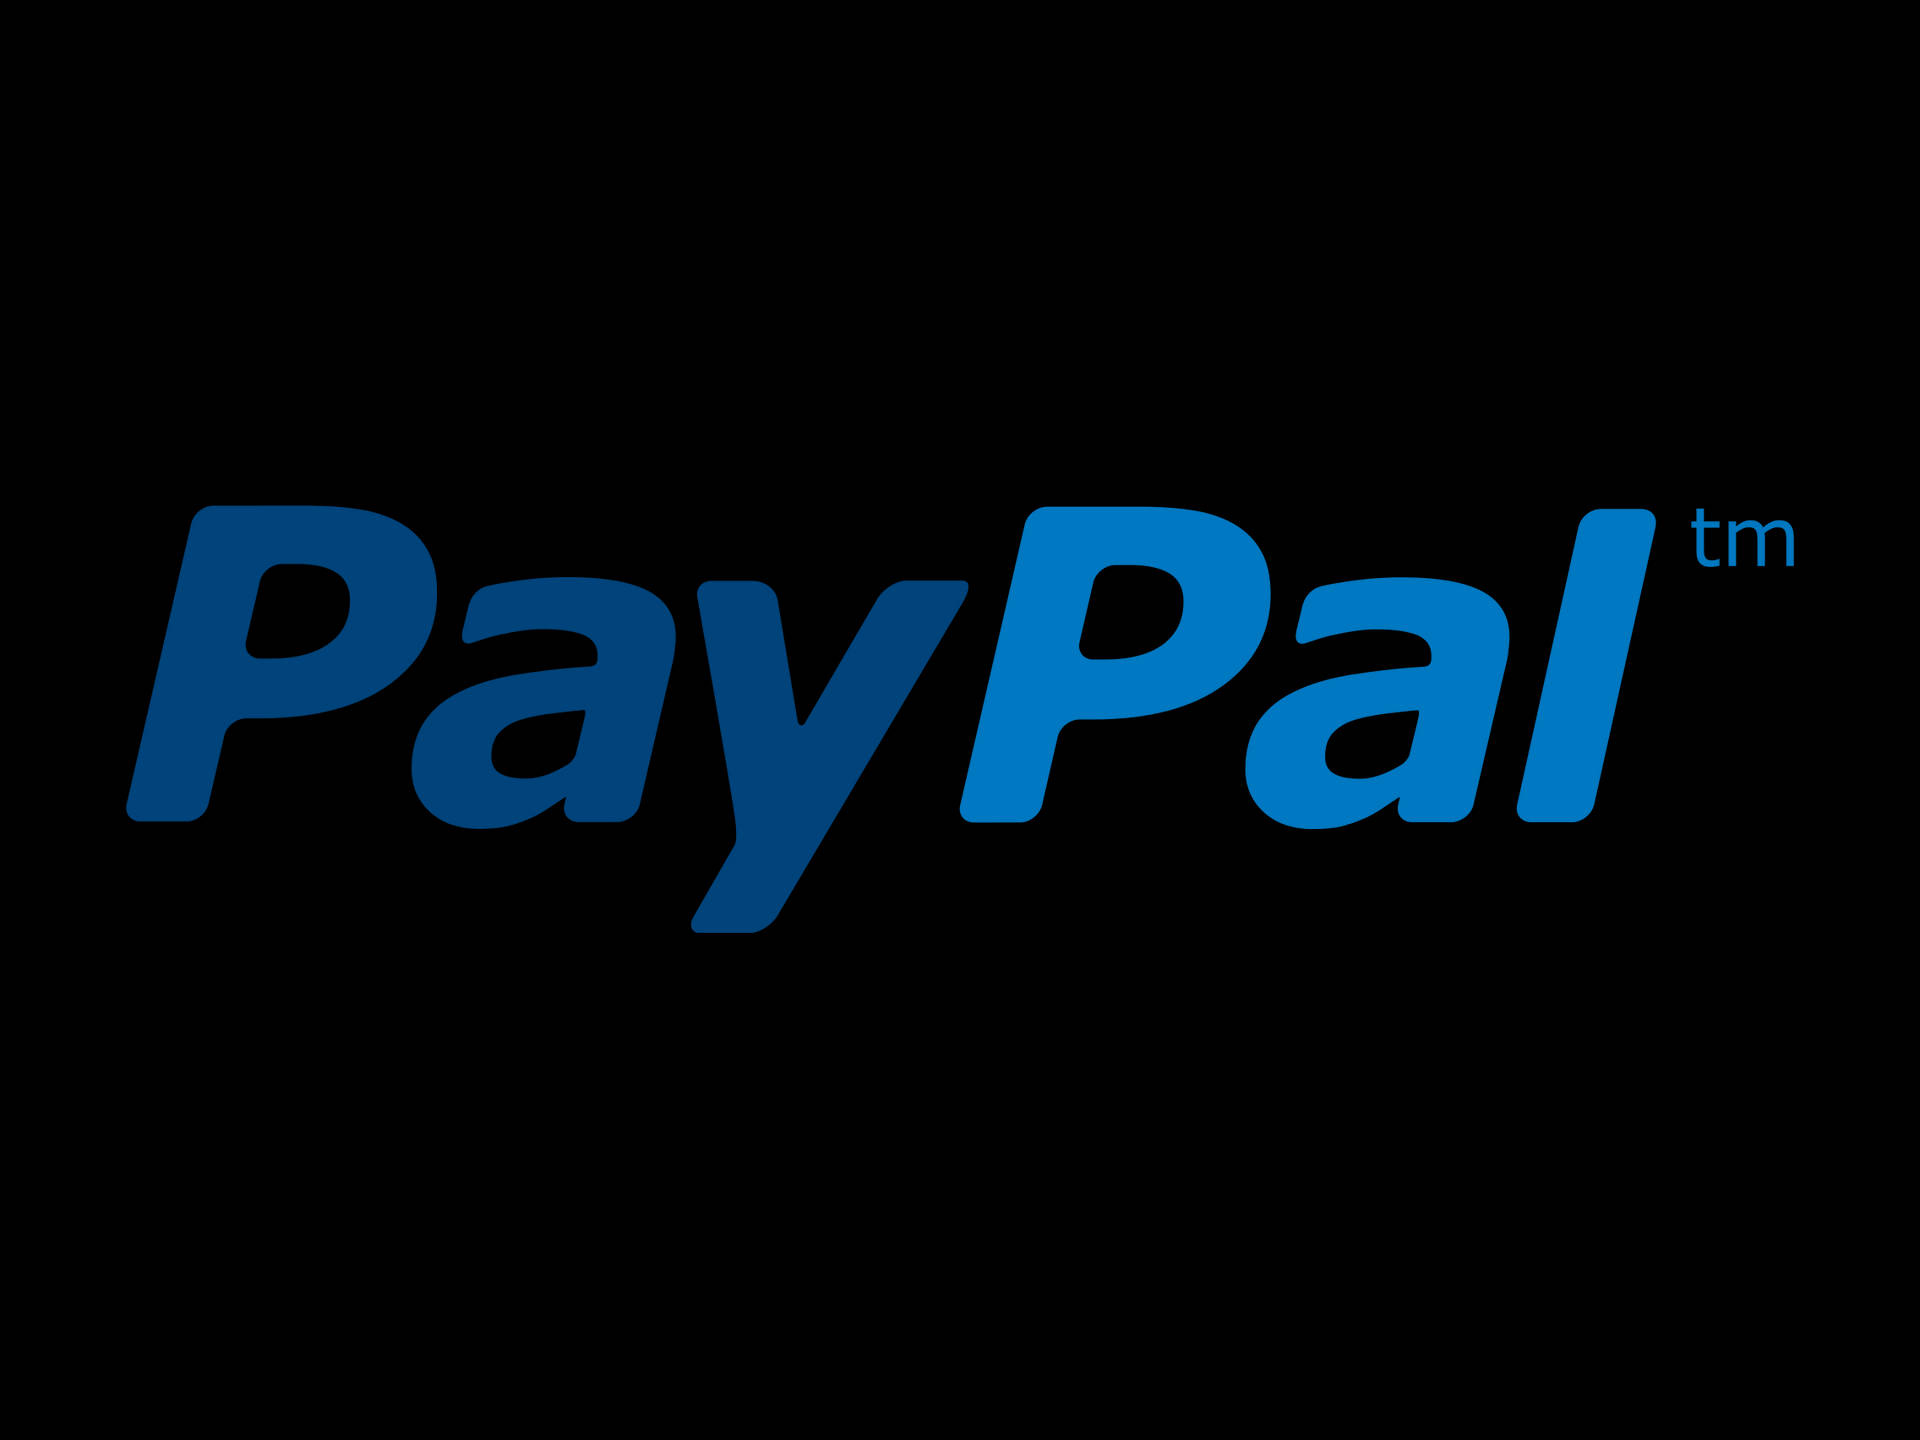 Paypal 2012 Logo Design Wallpaper